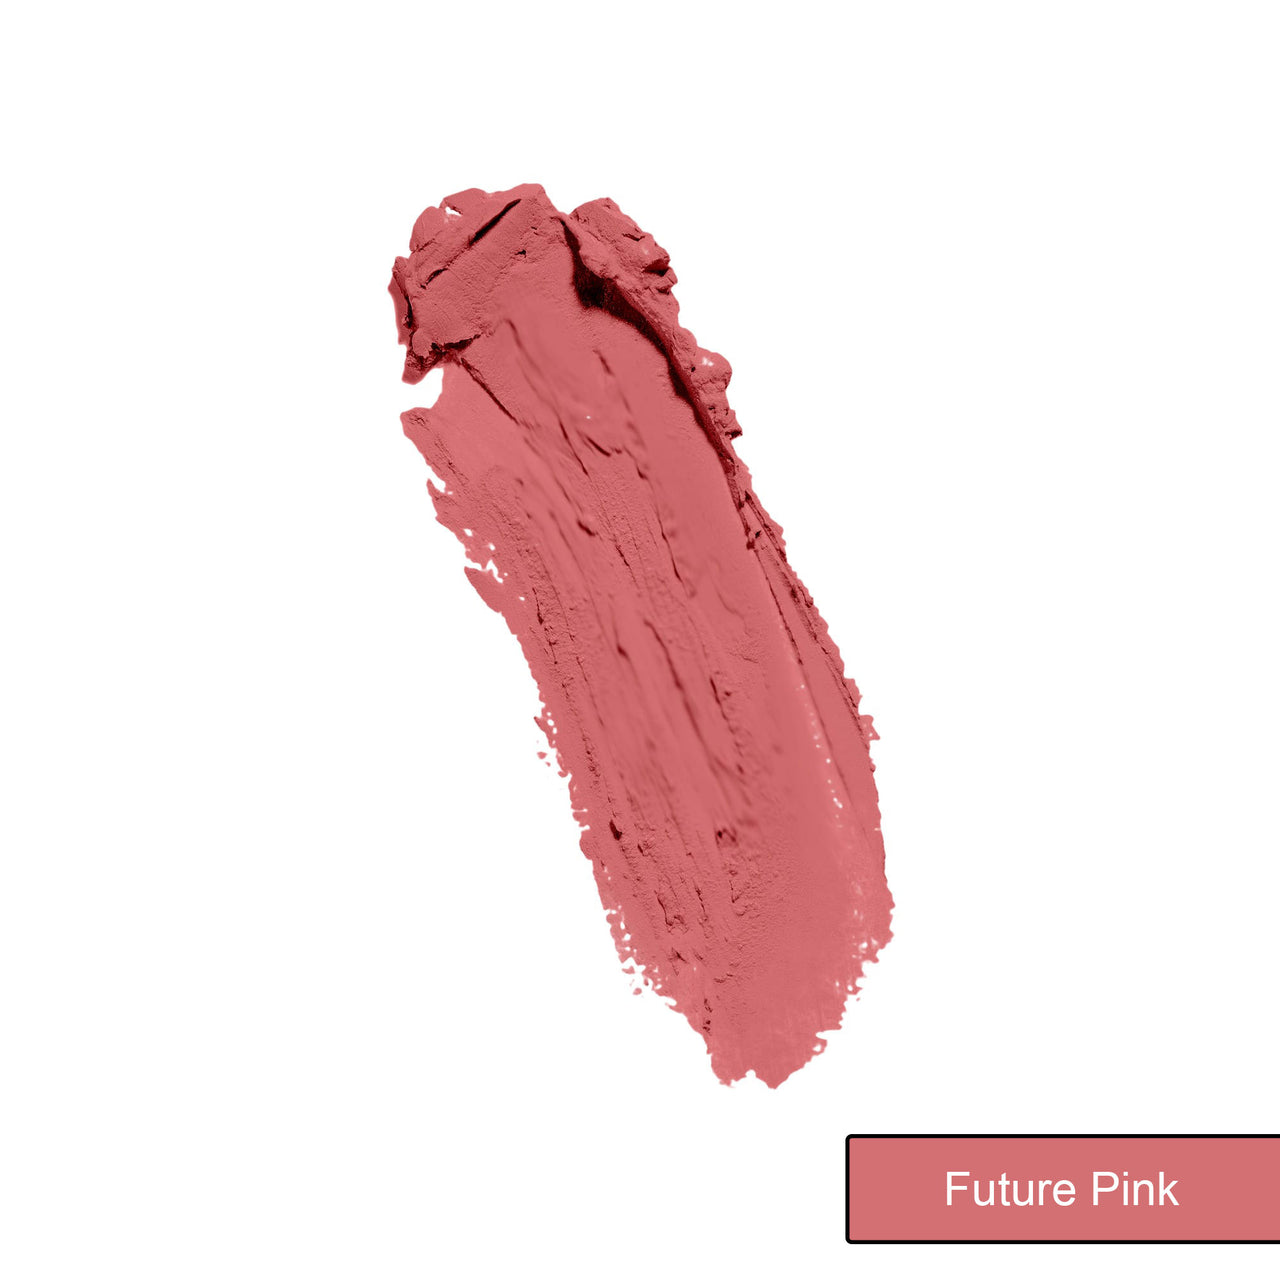 Future Pink